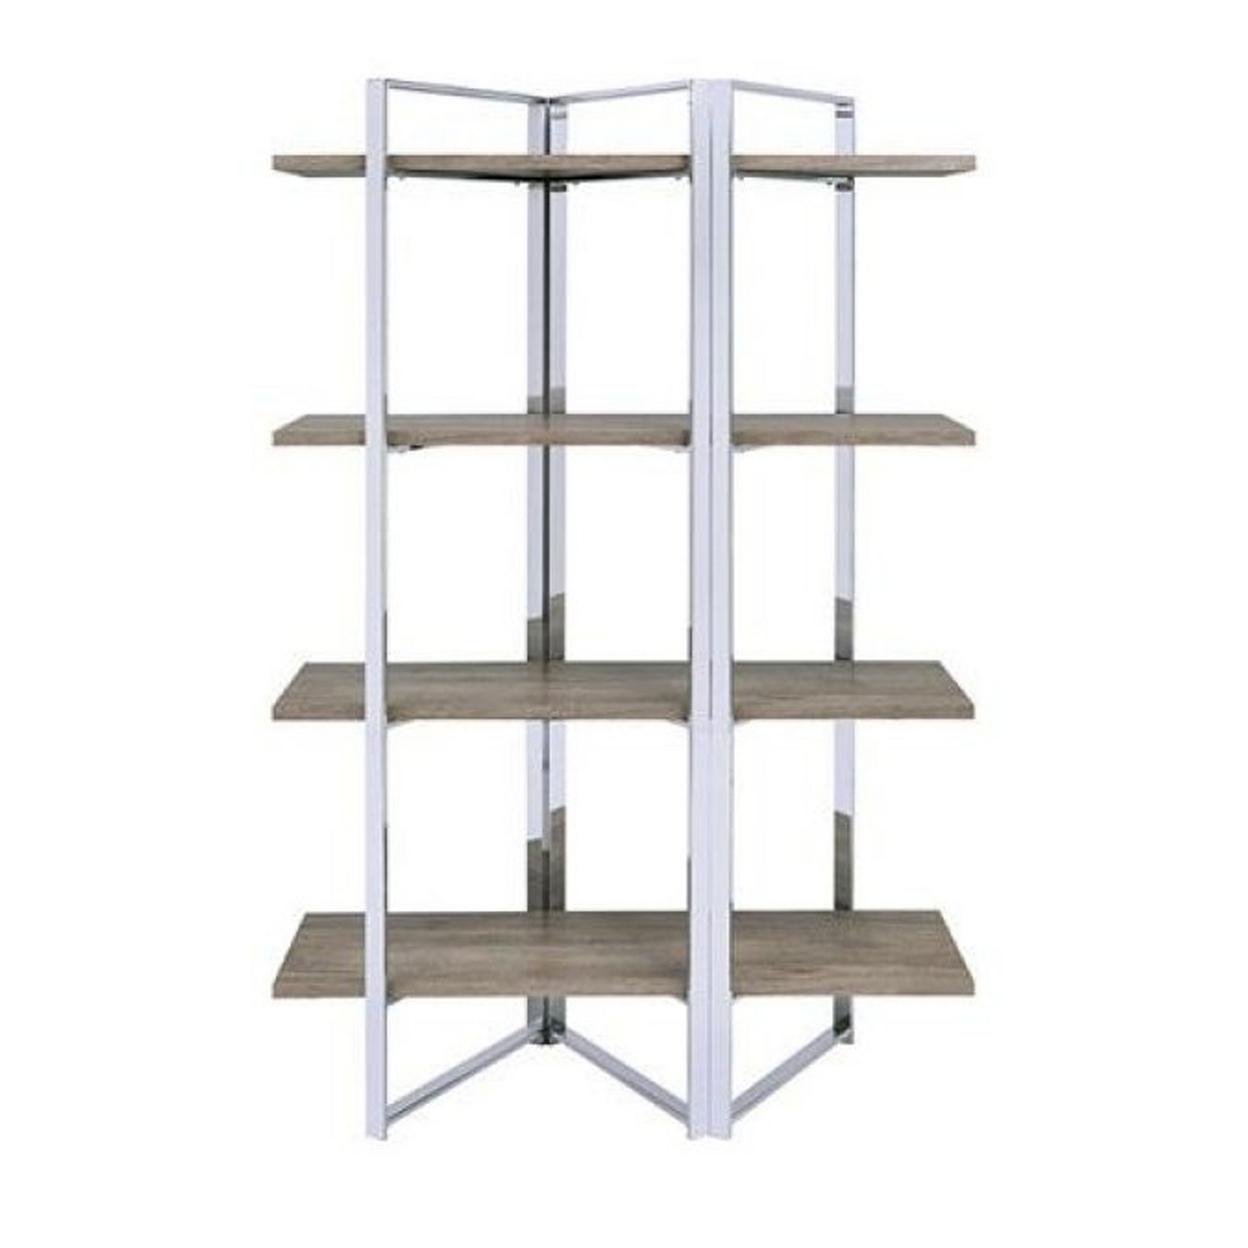 Geometric Metal Framed Bookshelf With Four Open Wooden Shelves, Brown And Silver- Saltoro Sherpi